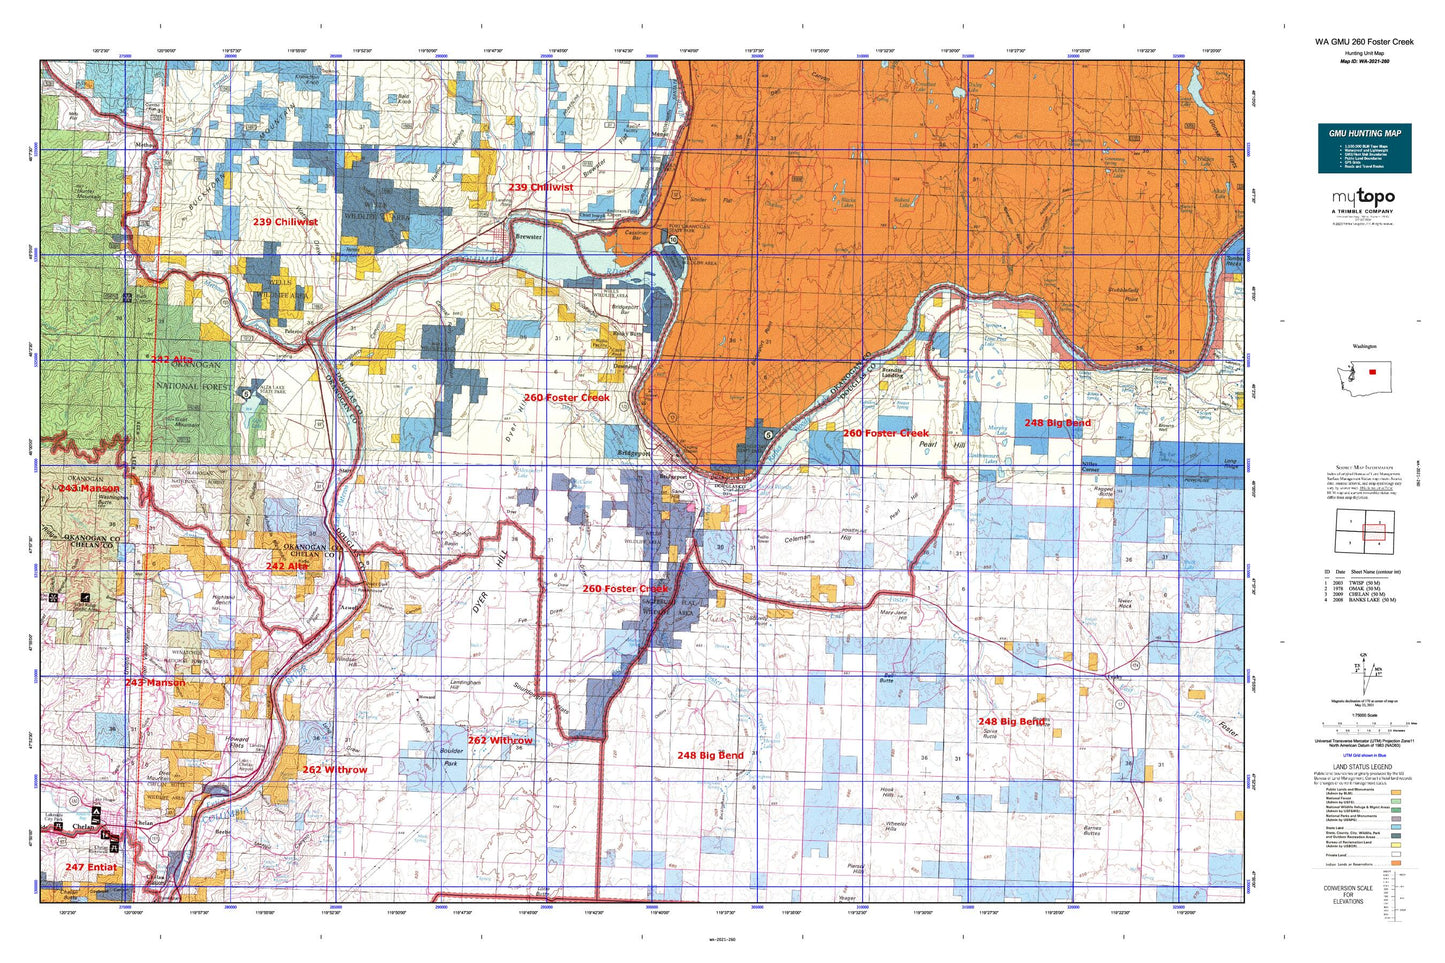 Washington GMU 260 Foster Creek Map Image